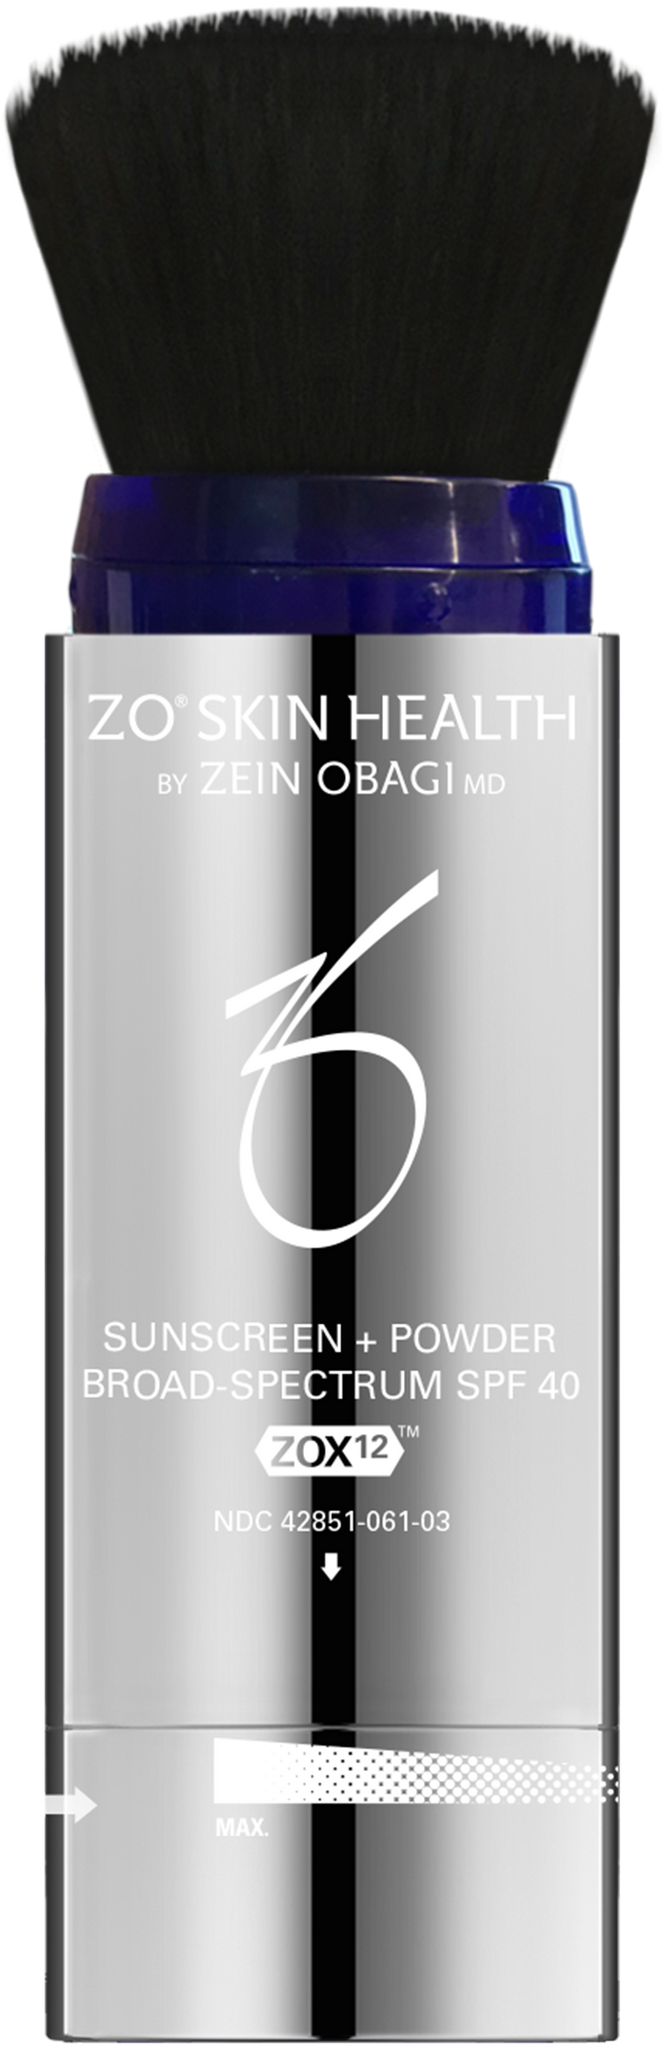 Zo Skin Health - Sunscreen + Powder Broad-Spectrum Light SPF 40